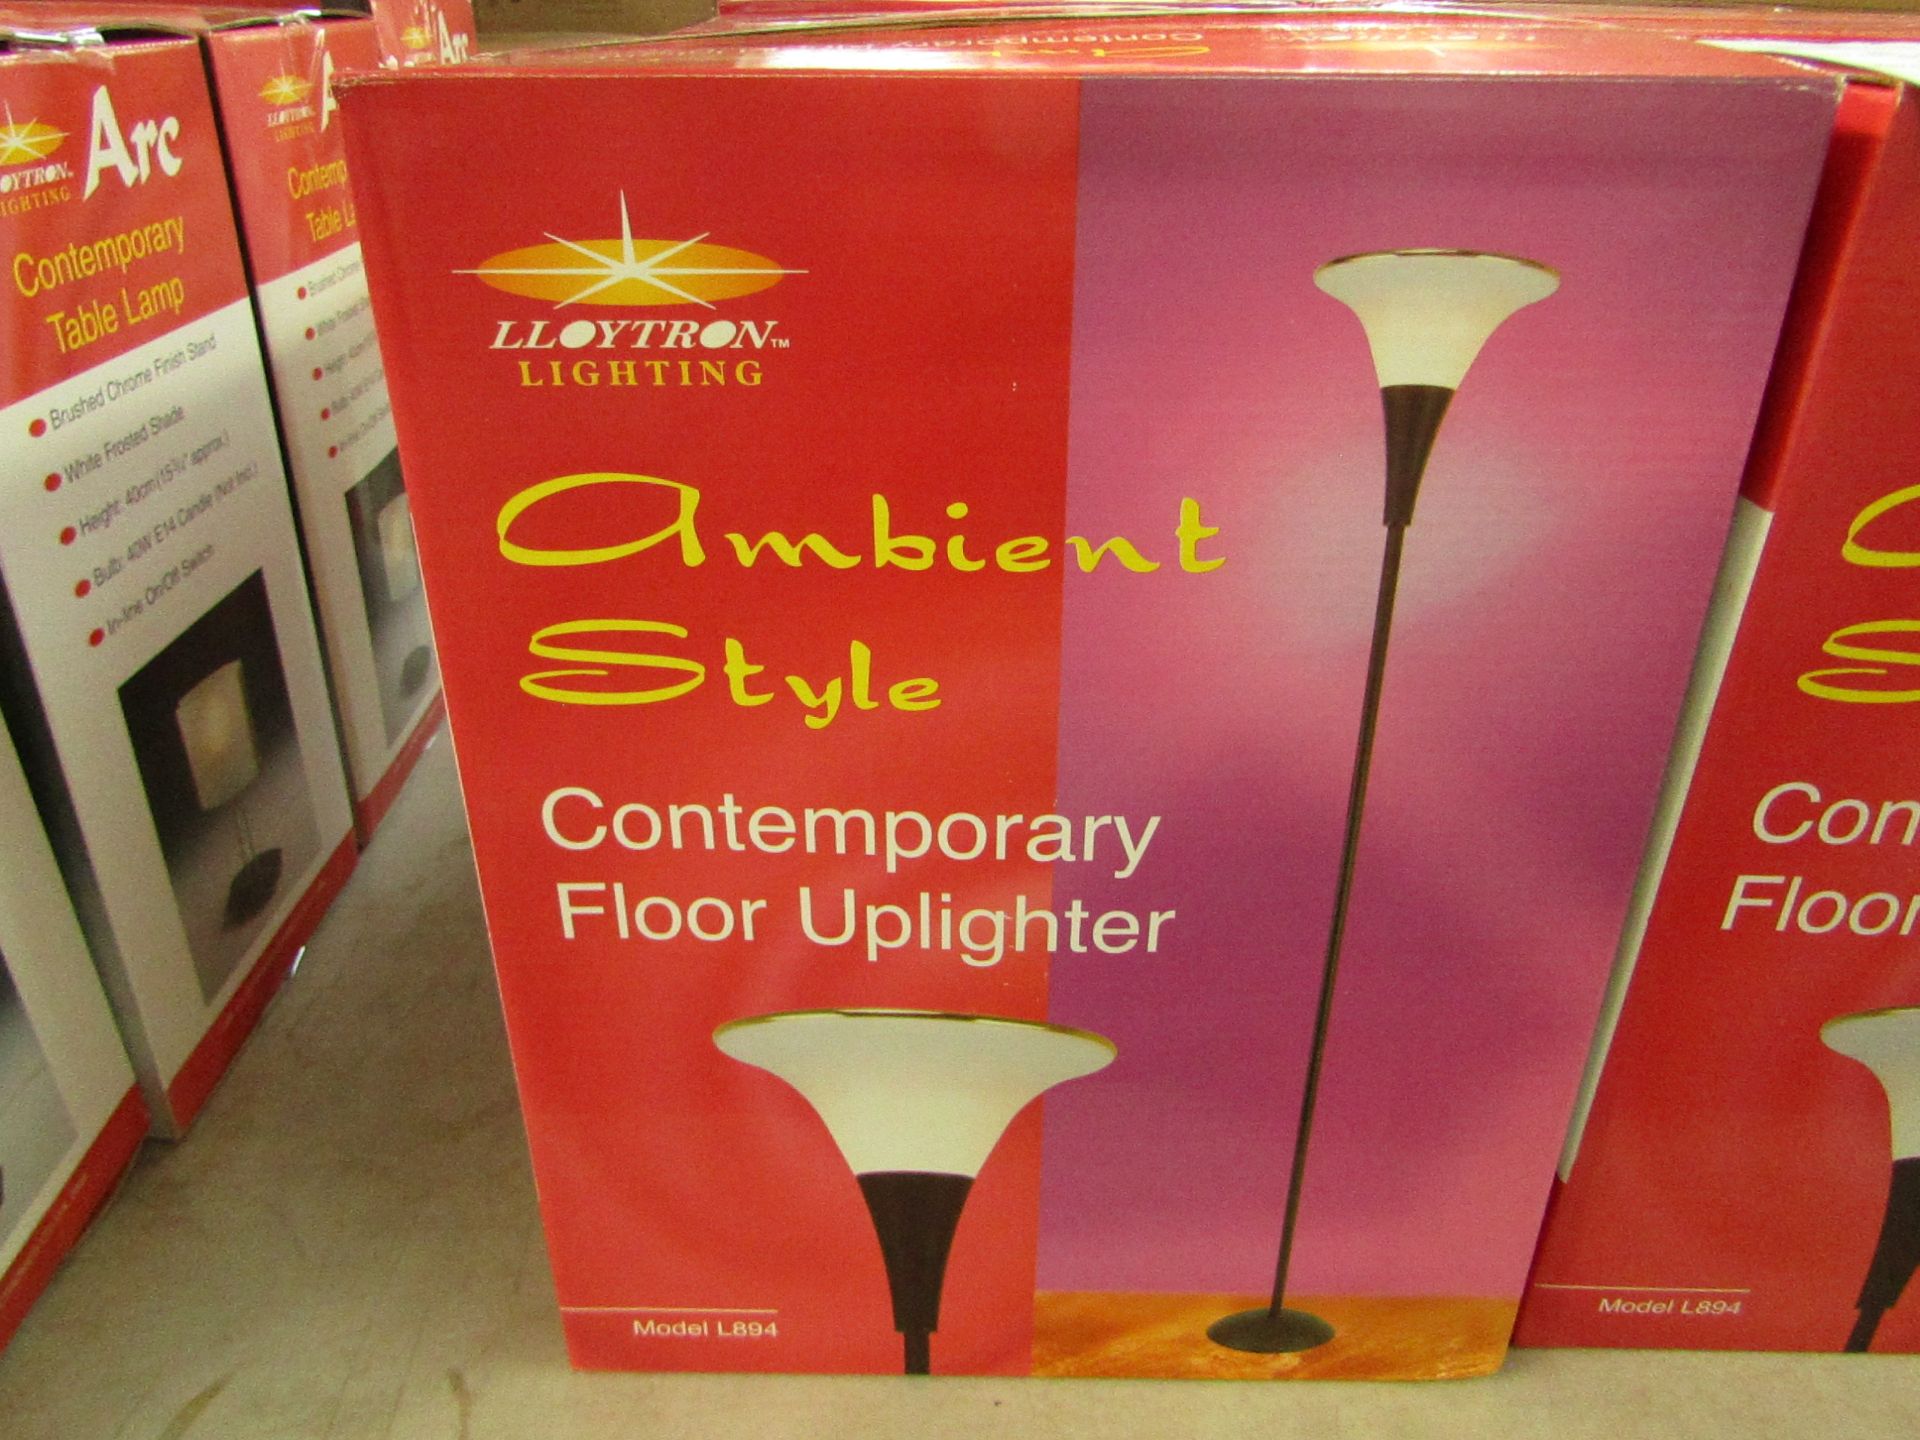 Lloytron Lighting - Ambient Style Contemporary Floor Uplighter - Looks Unused & Boxed.